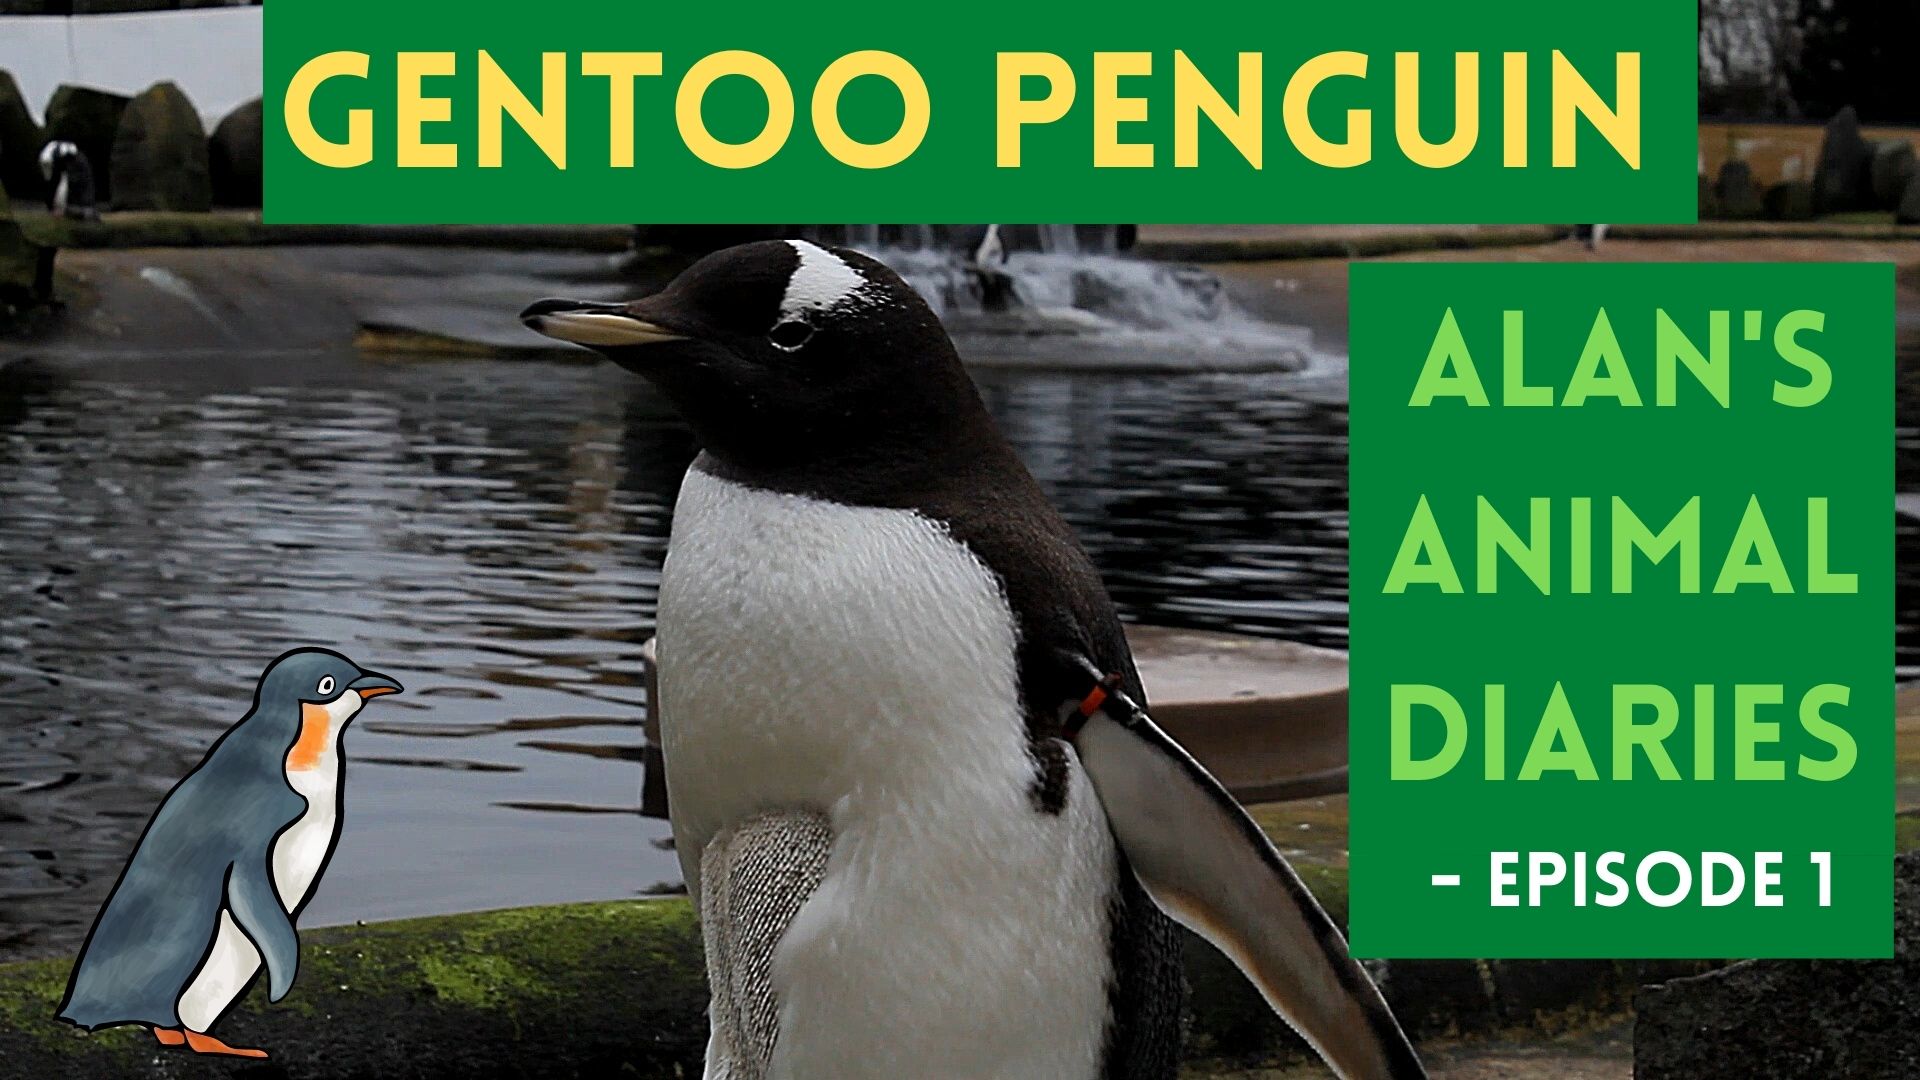 Meet The Gentoo Penguins At Edinburgh Zoo - Unbelievable Creatures On Alan's Animal Diaries #Penguin